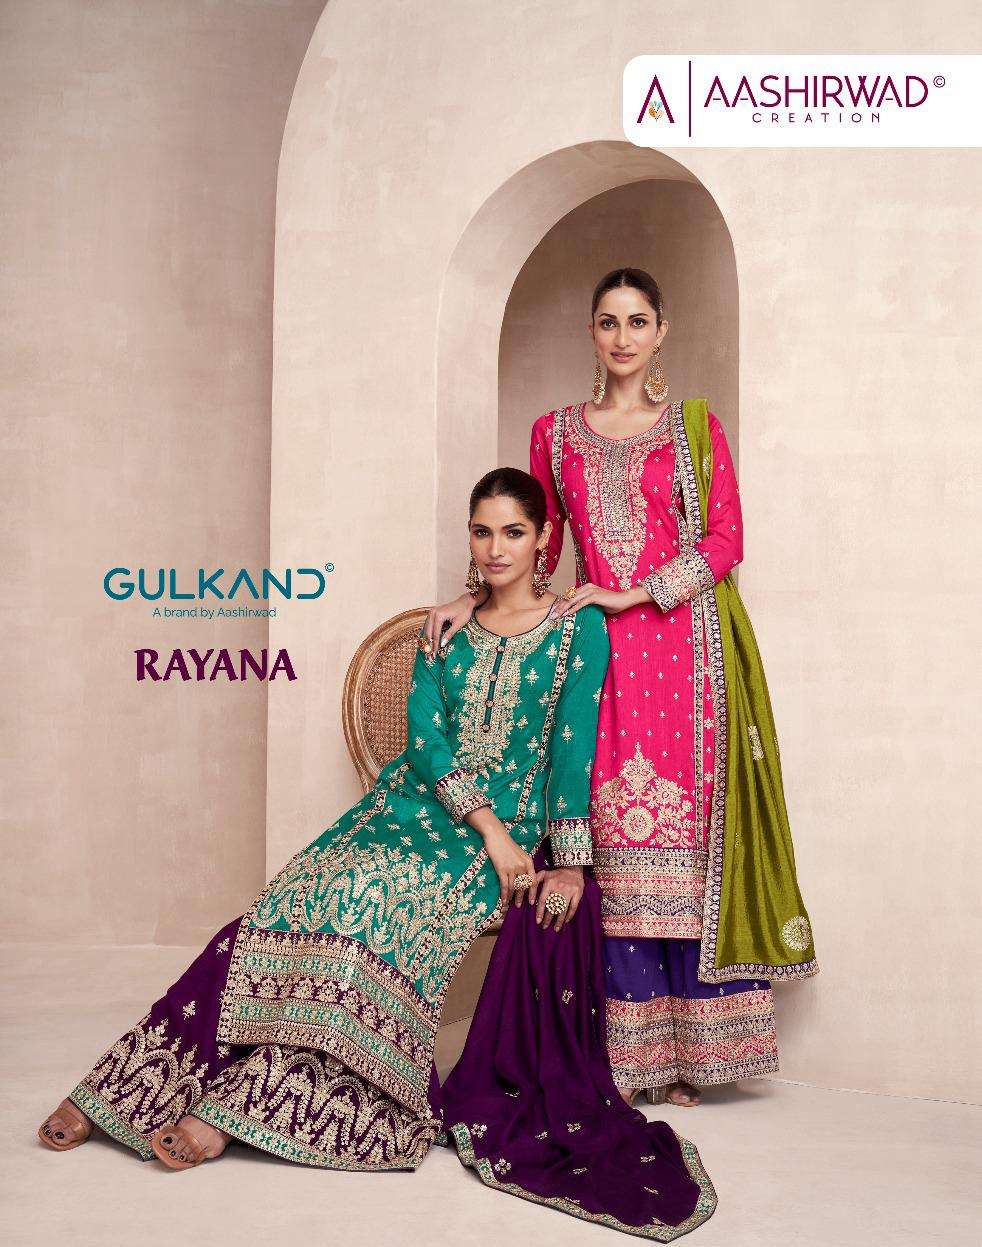 Aashirwad Gulkand Rayana Latest Designer Palazzo Dress Wedding Collection